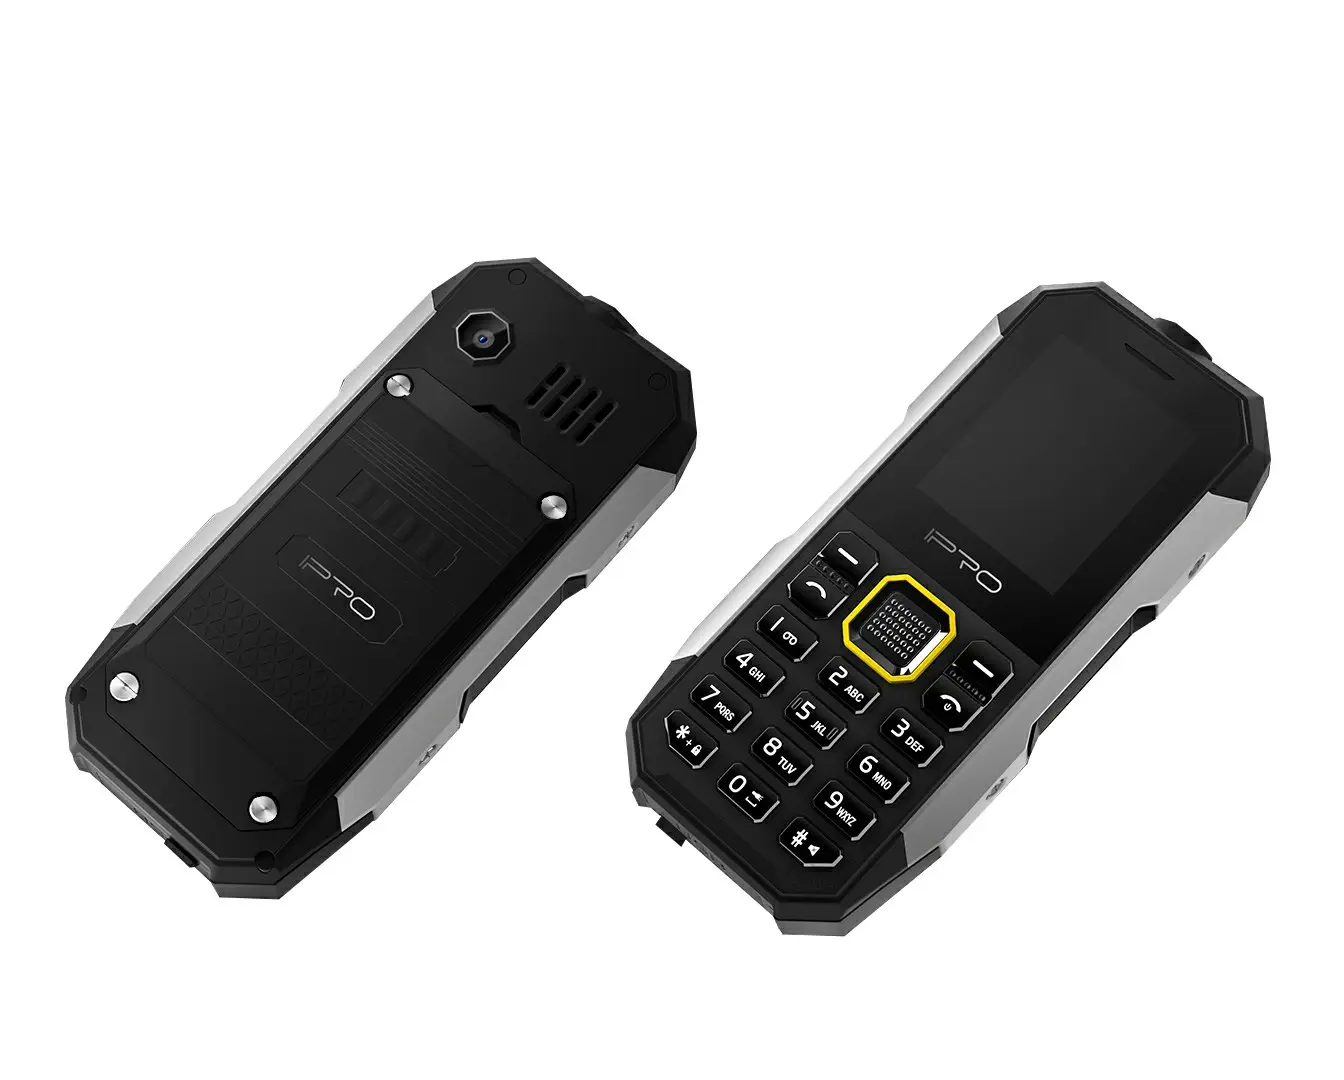 OEM-Fabrik 2500 mAh-Akku 2.0'' wasserdichtes mobiles Fall-sicheres Mobiltelefon große Taste Handy robustes Telefon für Nokia